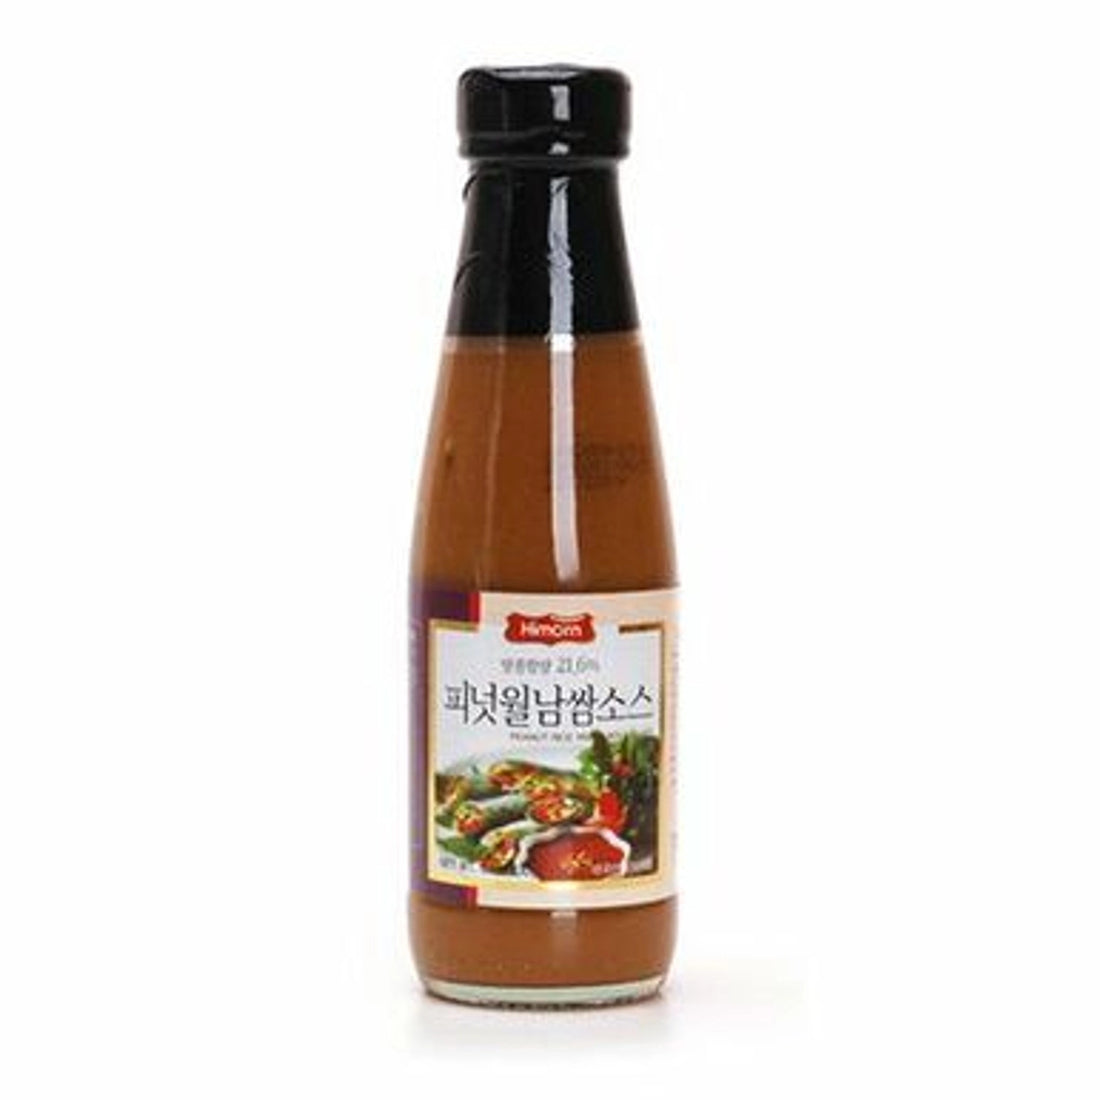 Himorn Peanut Rice Paper Roll Sauce 8.1oz(230g) - Anytime Basket